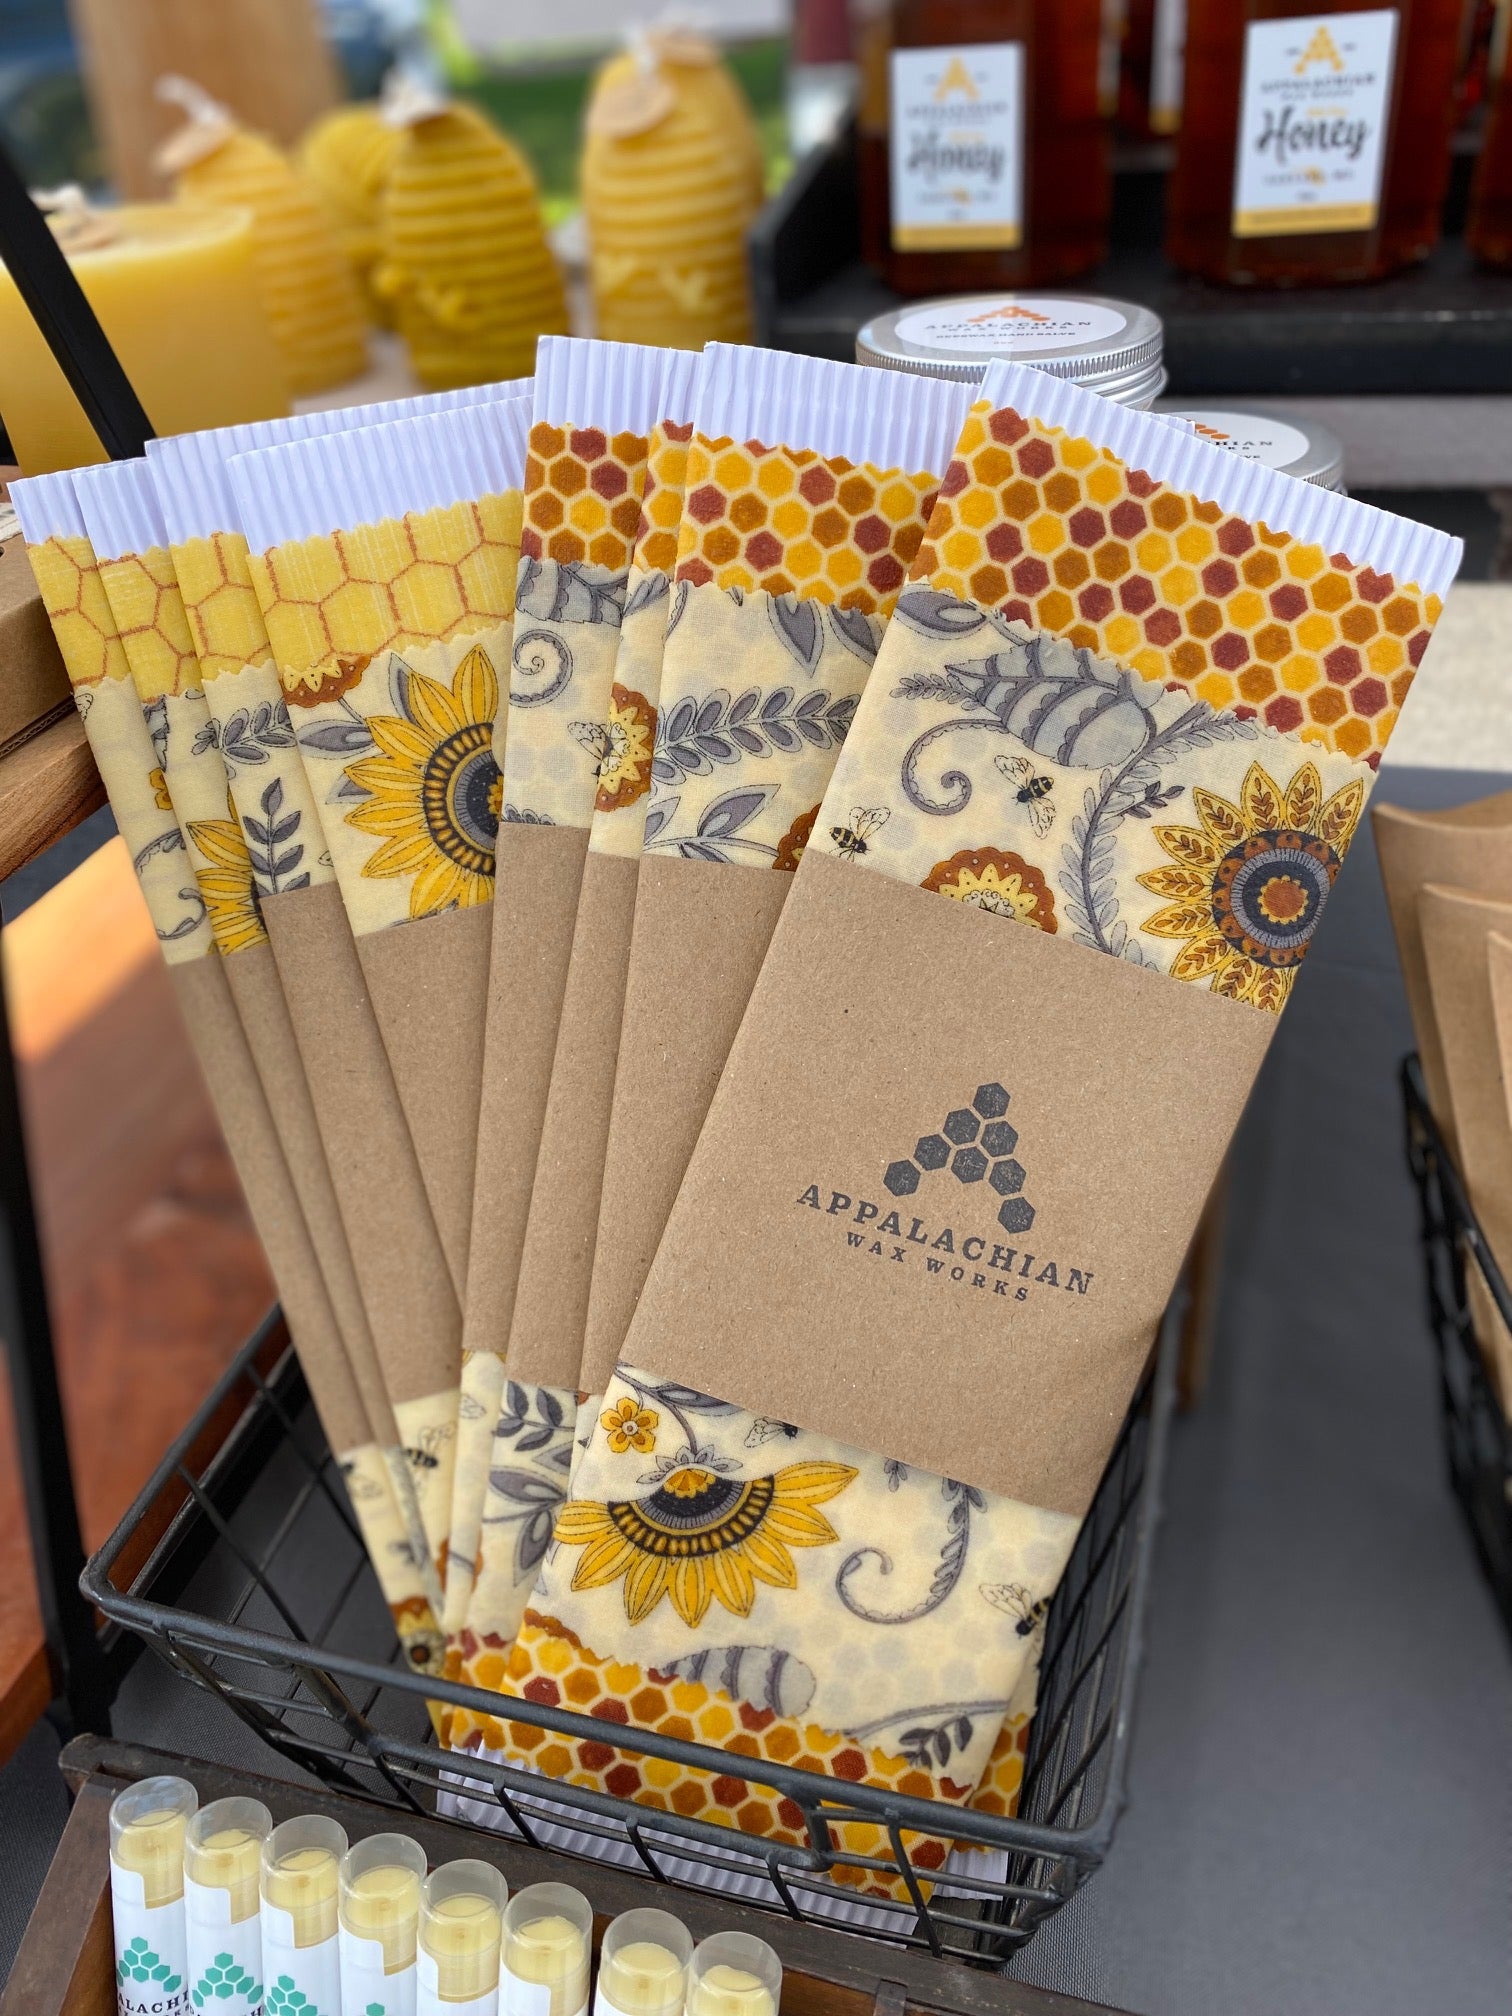 Bees Wax Food Wraps - Appalachian Wax Works - Oakland MD